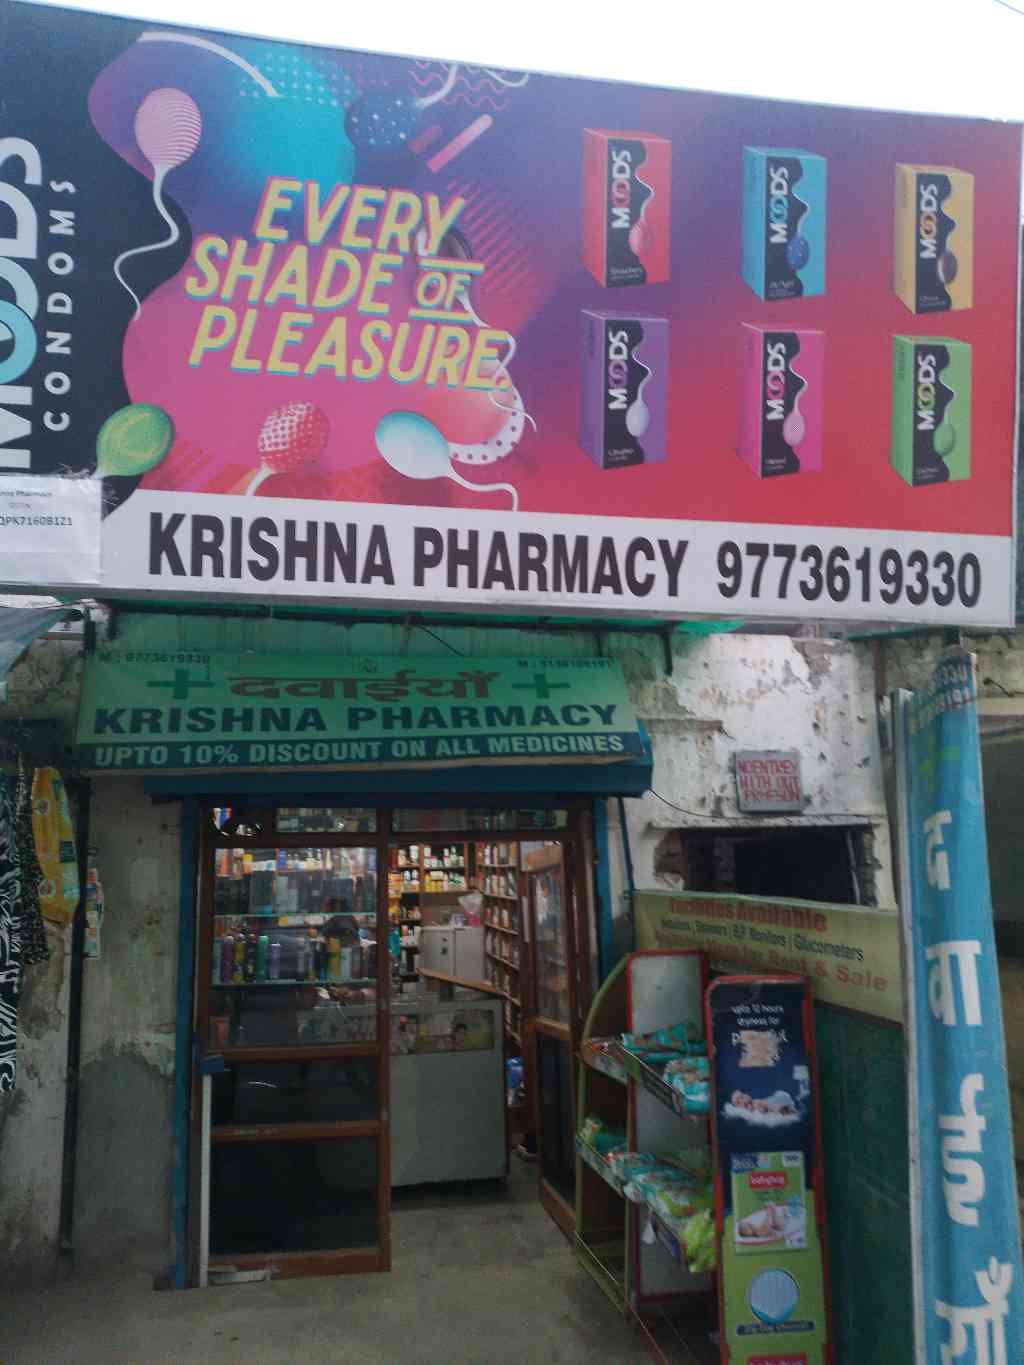 Krishna Pharmacy